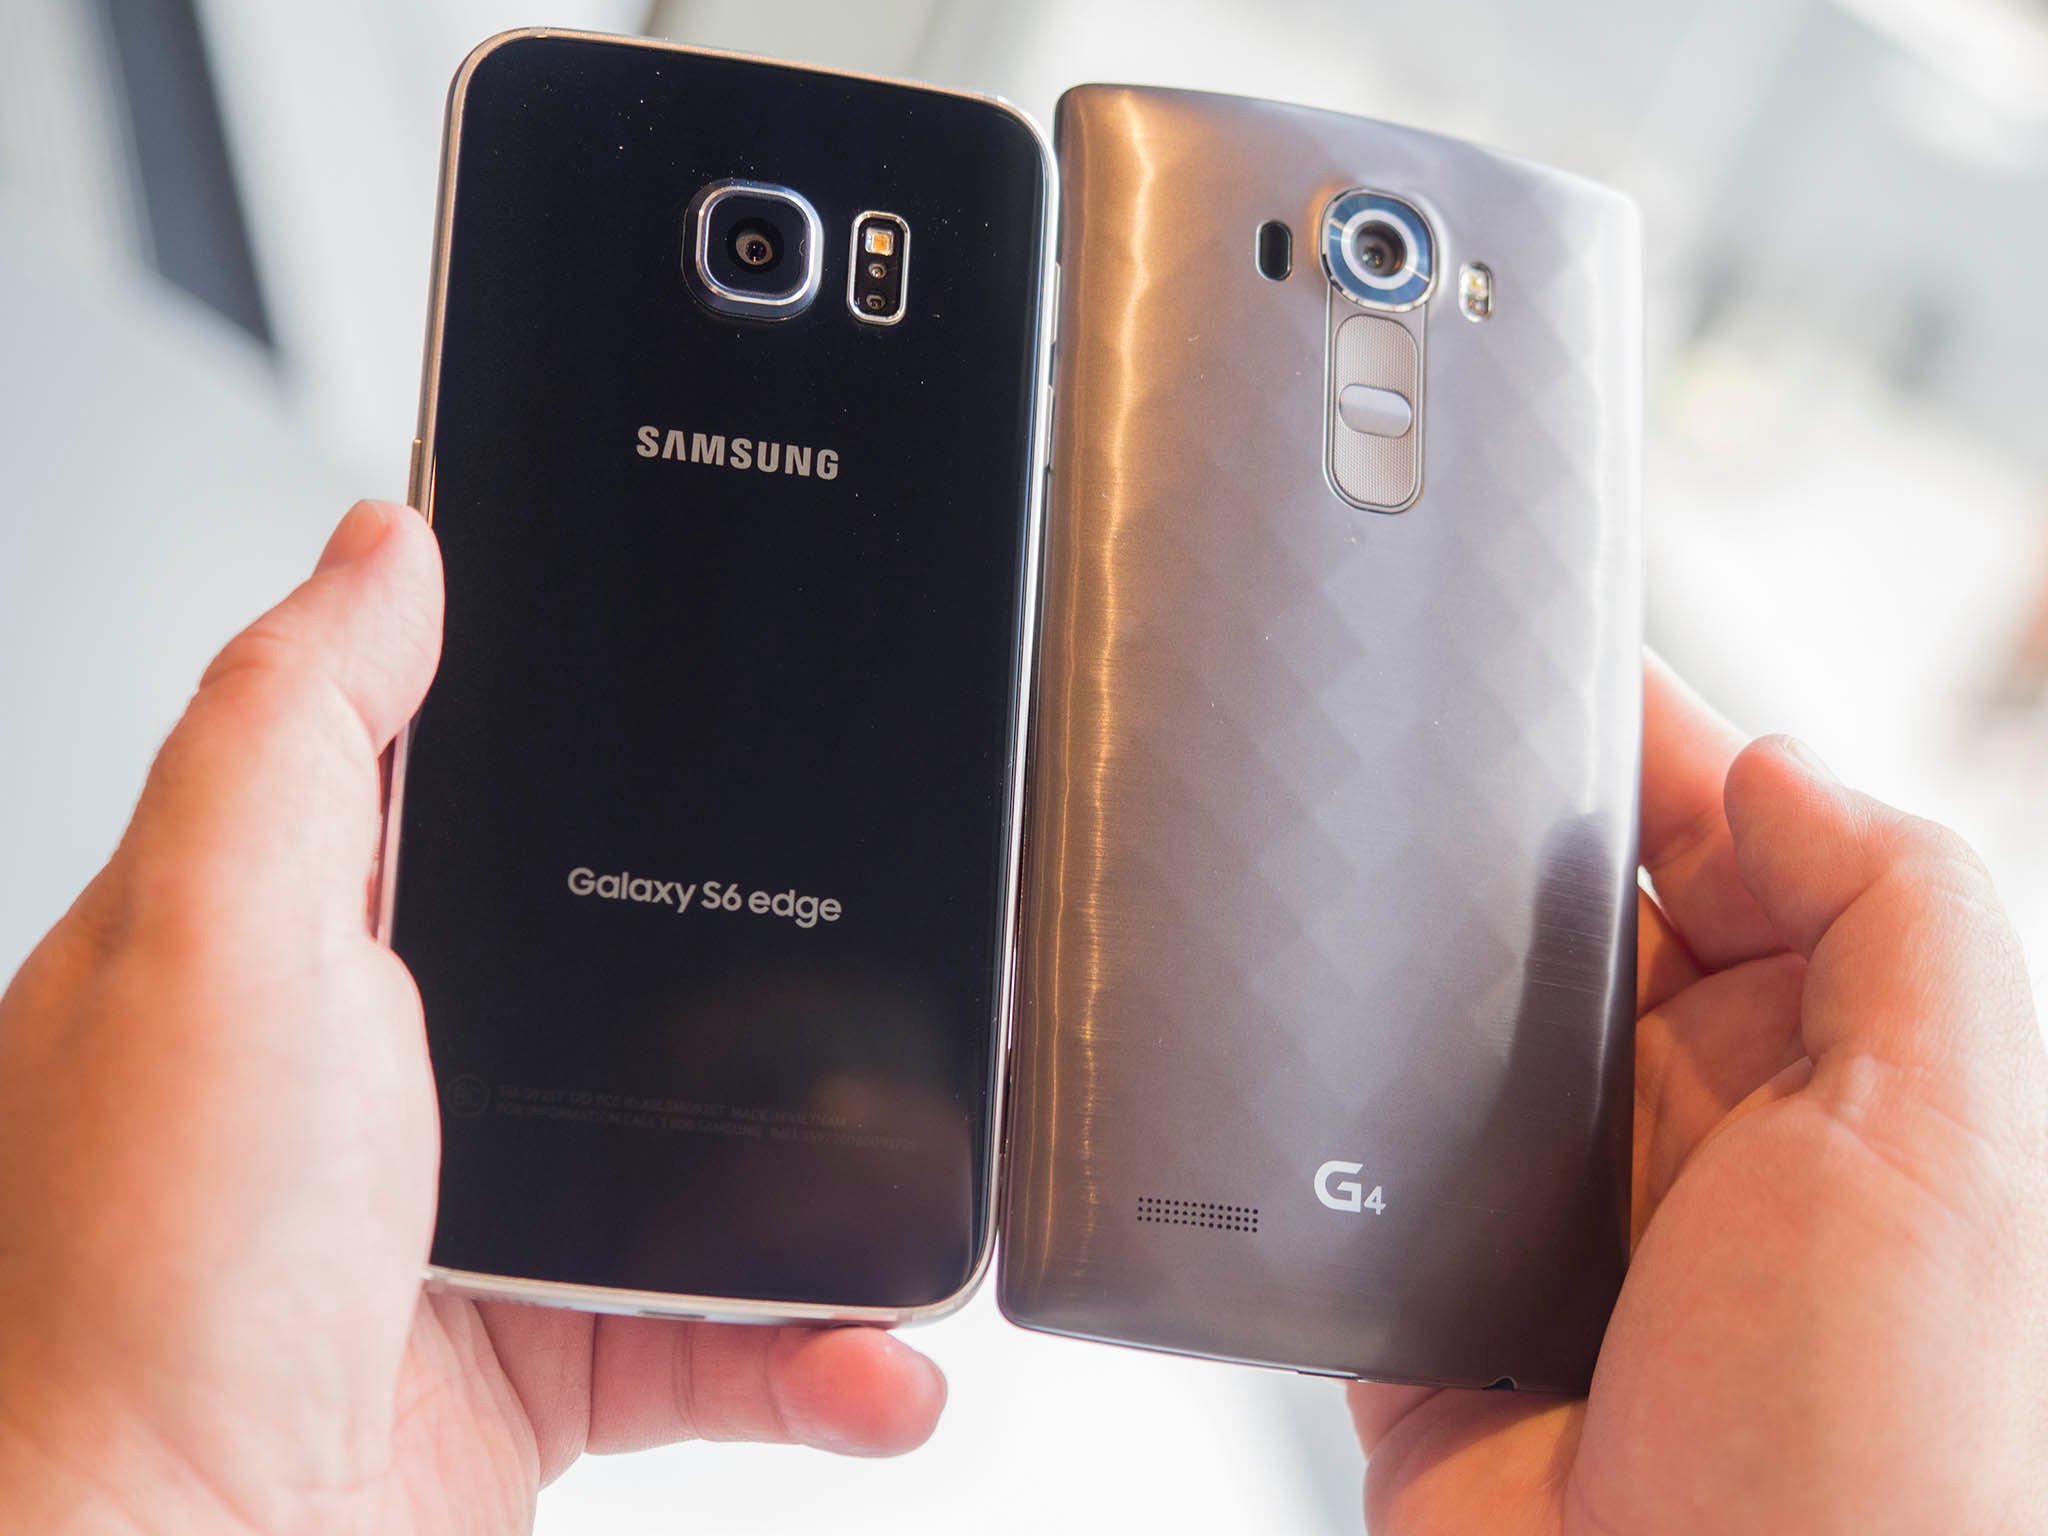 Samsung Galaxy S6 edge and LG G4